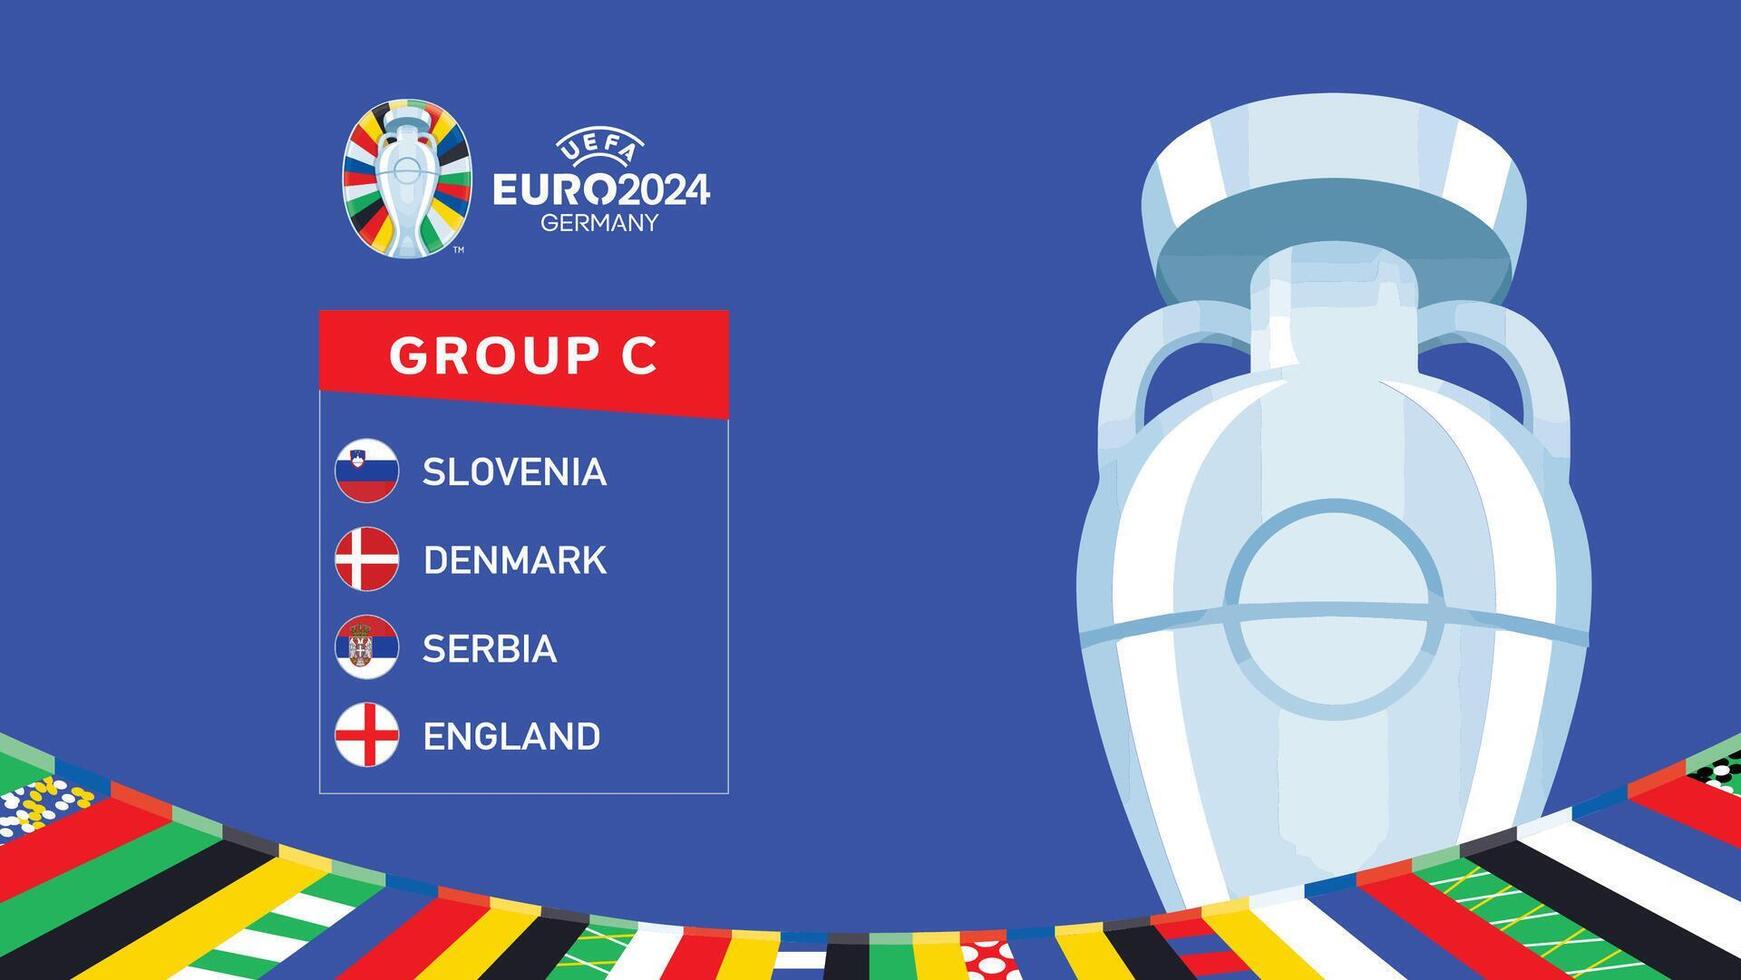 euro 2024 Duitsland groep c vlaggen ontwerp met trofee symbool officieel logo Europese Amerikaans voetbal laatste illustratie vector